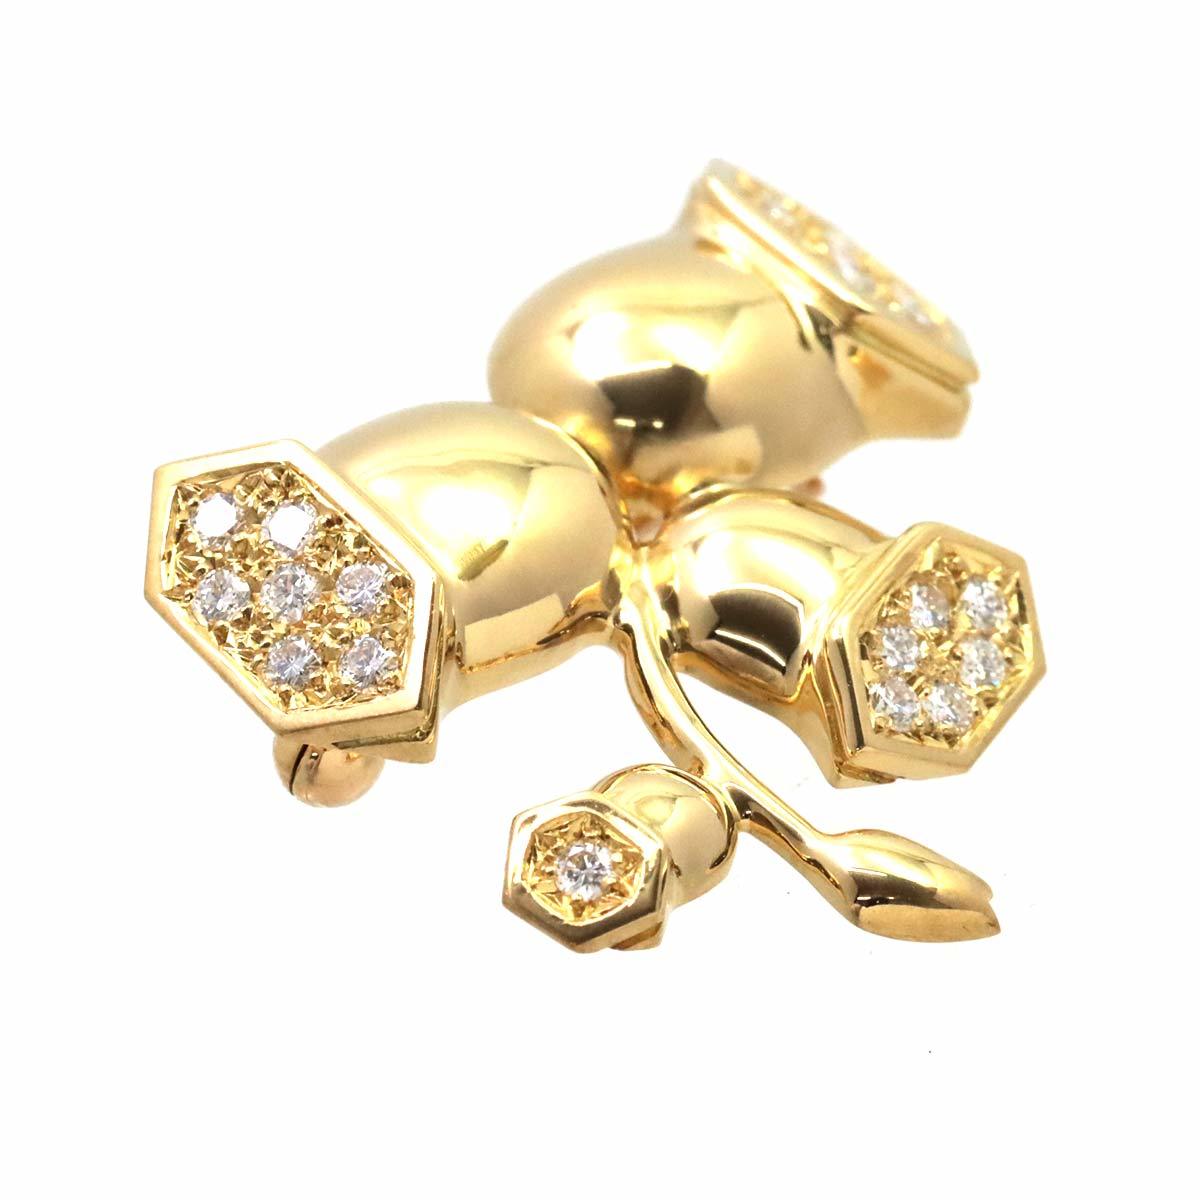  Christian Dior Dior diamond brooch 18K YG yellow gold 750 Diamond Brooch 90196599